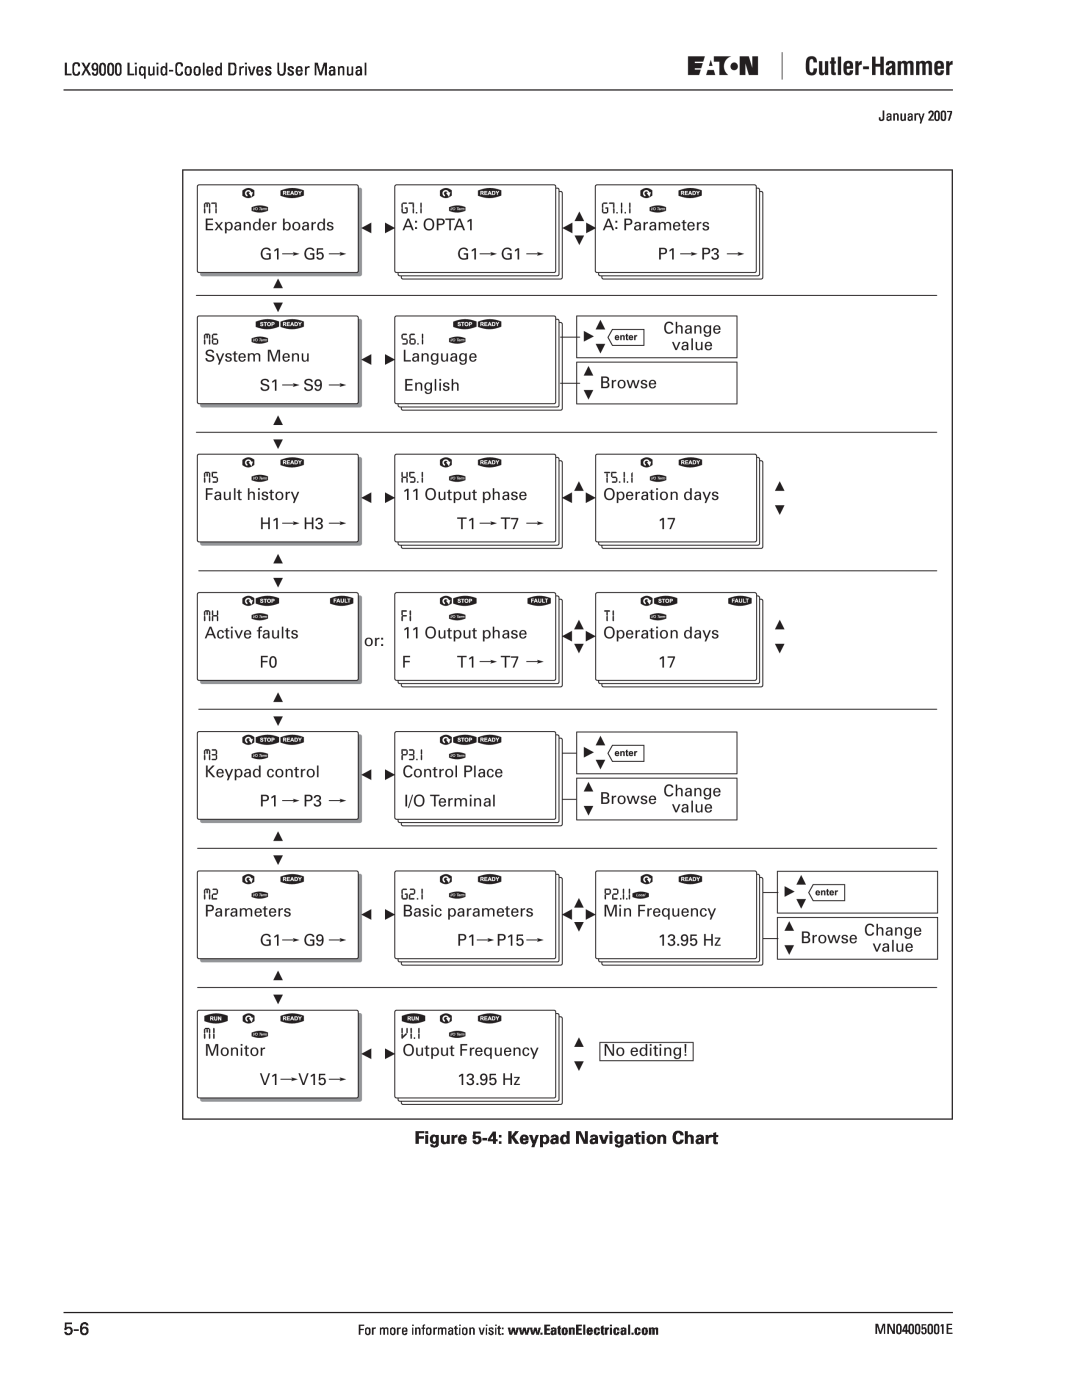 J. T. Eaton user manual 4 Keypad Navigation Chart, LCX9000 Liquid-Cooled Drives User Manual 